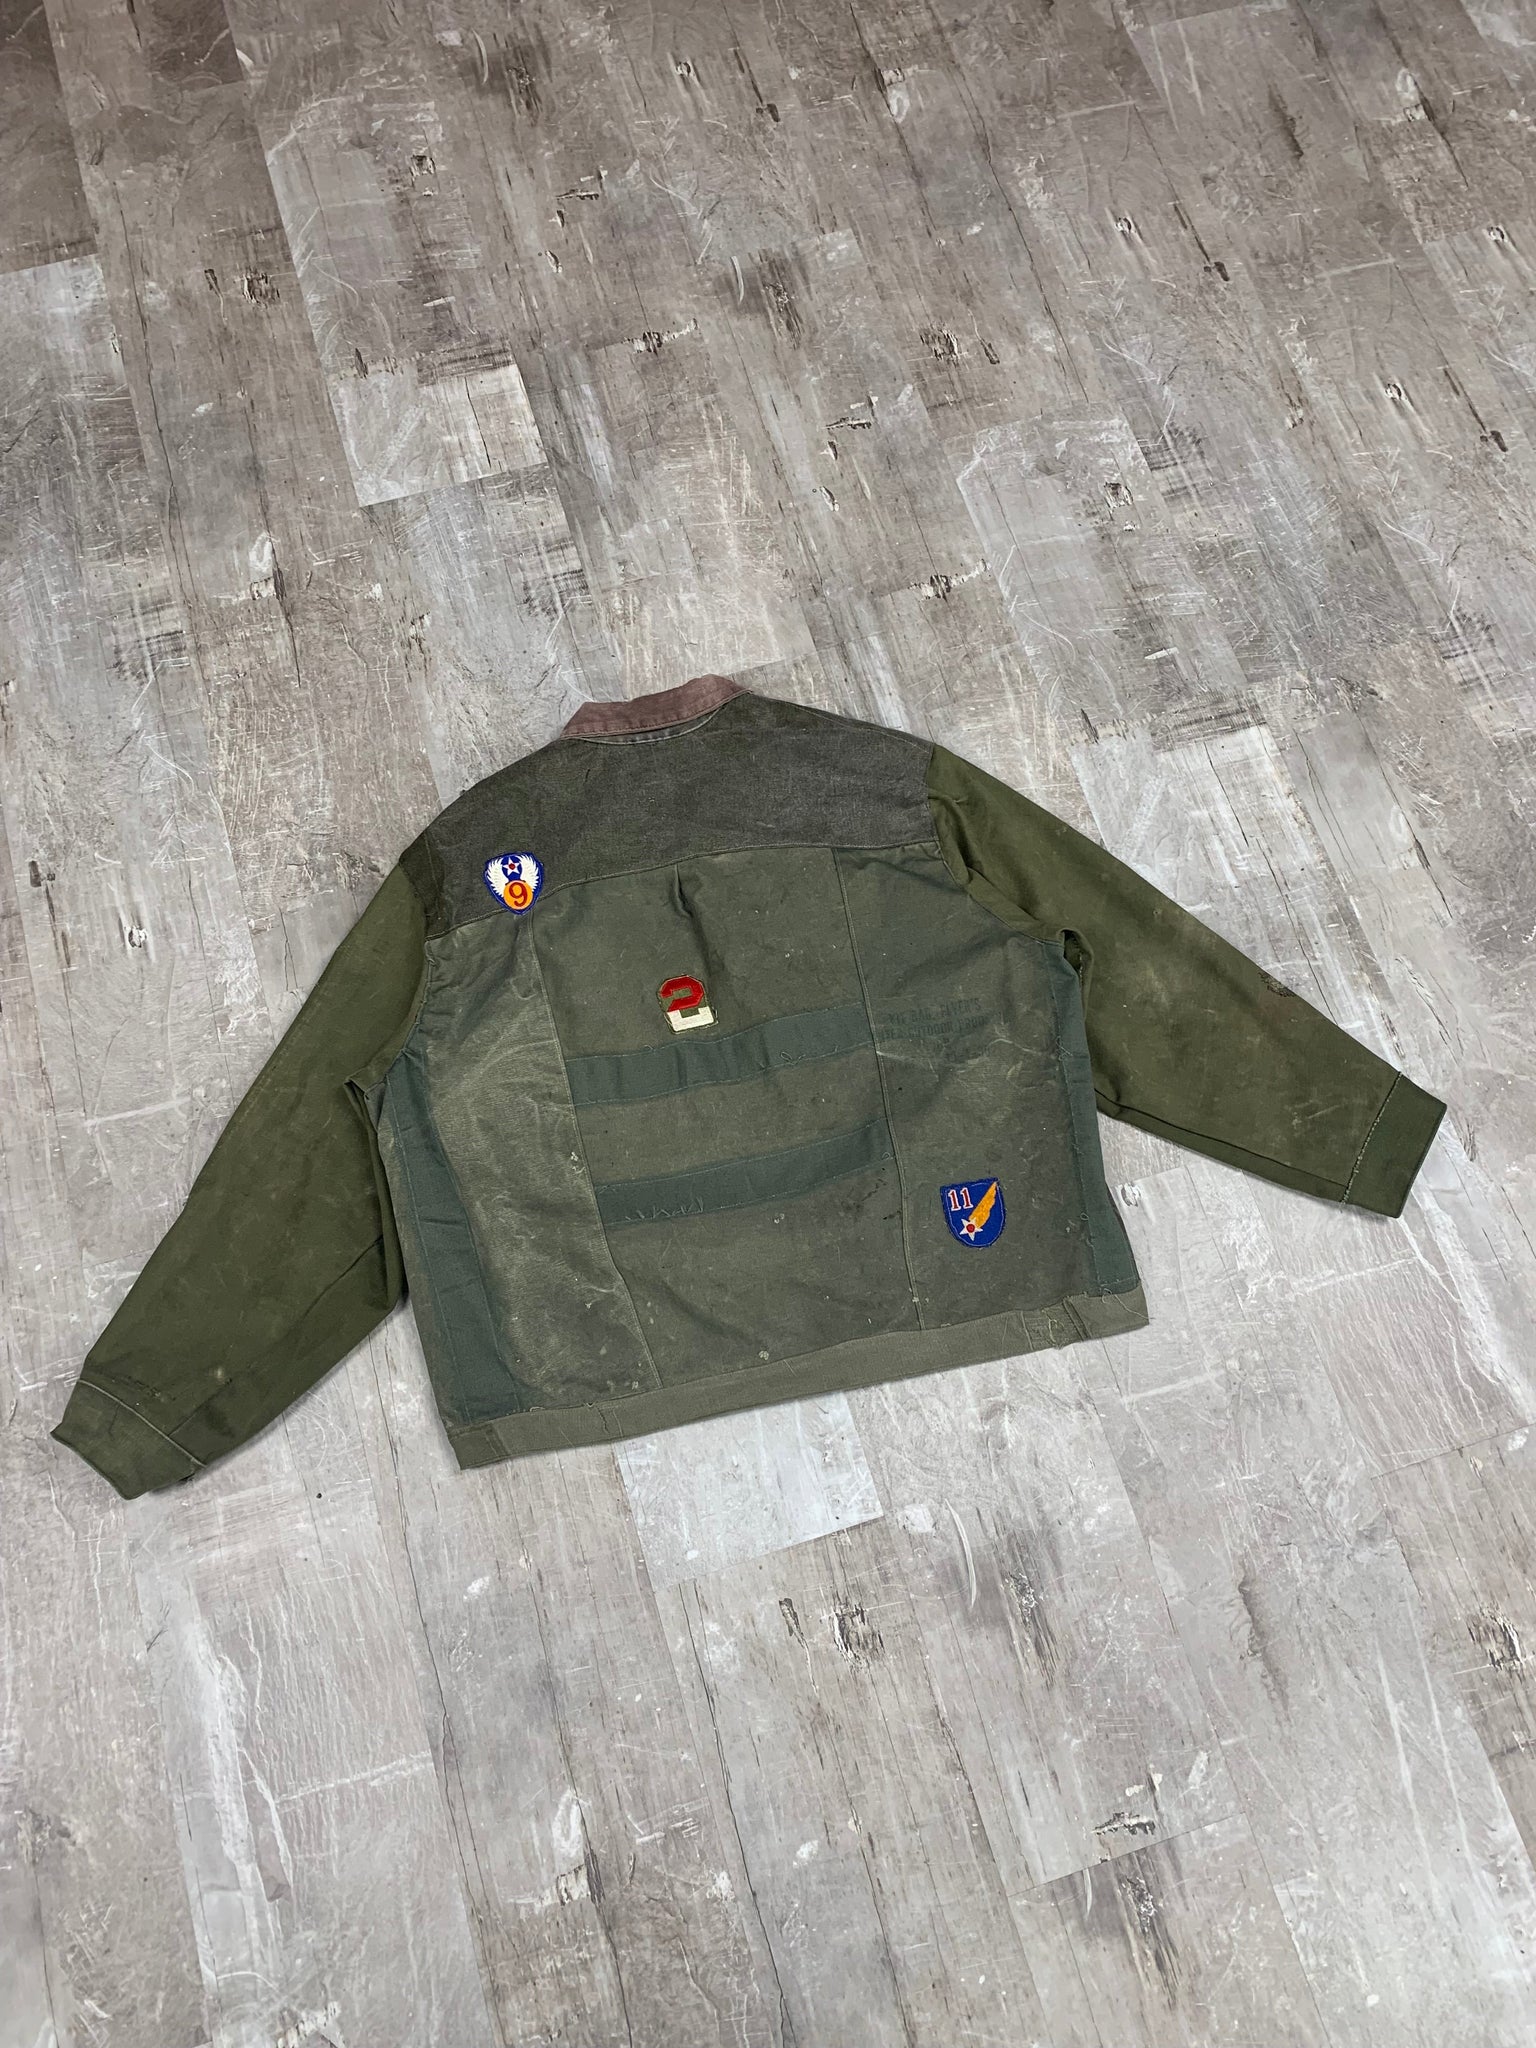 1 of 1 Army Canvas Jacket #2 - XL